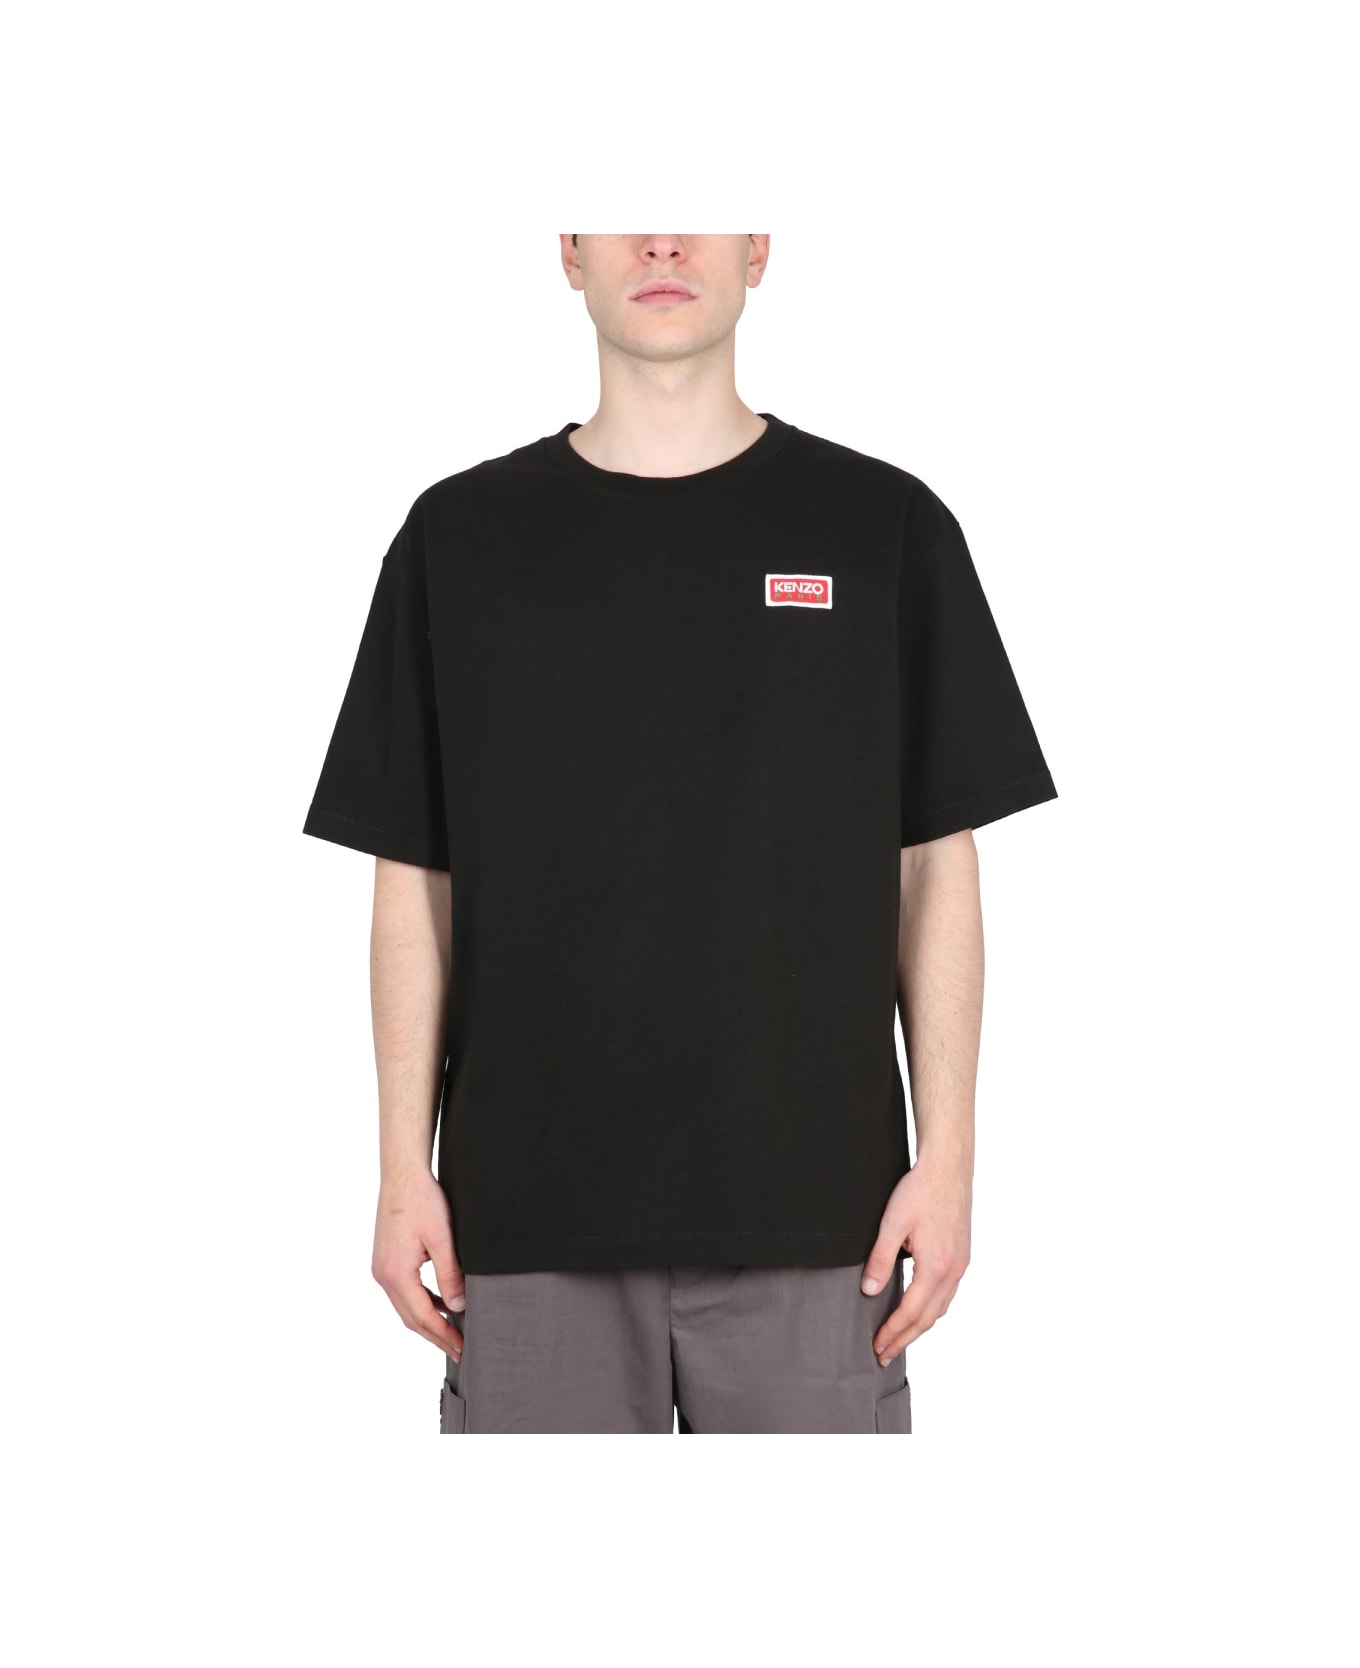 Kenzo T-shirt With Logo - BLACK シャツ